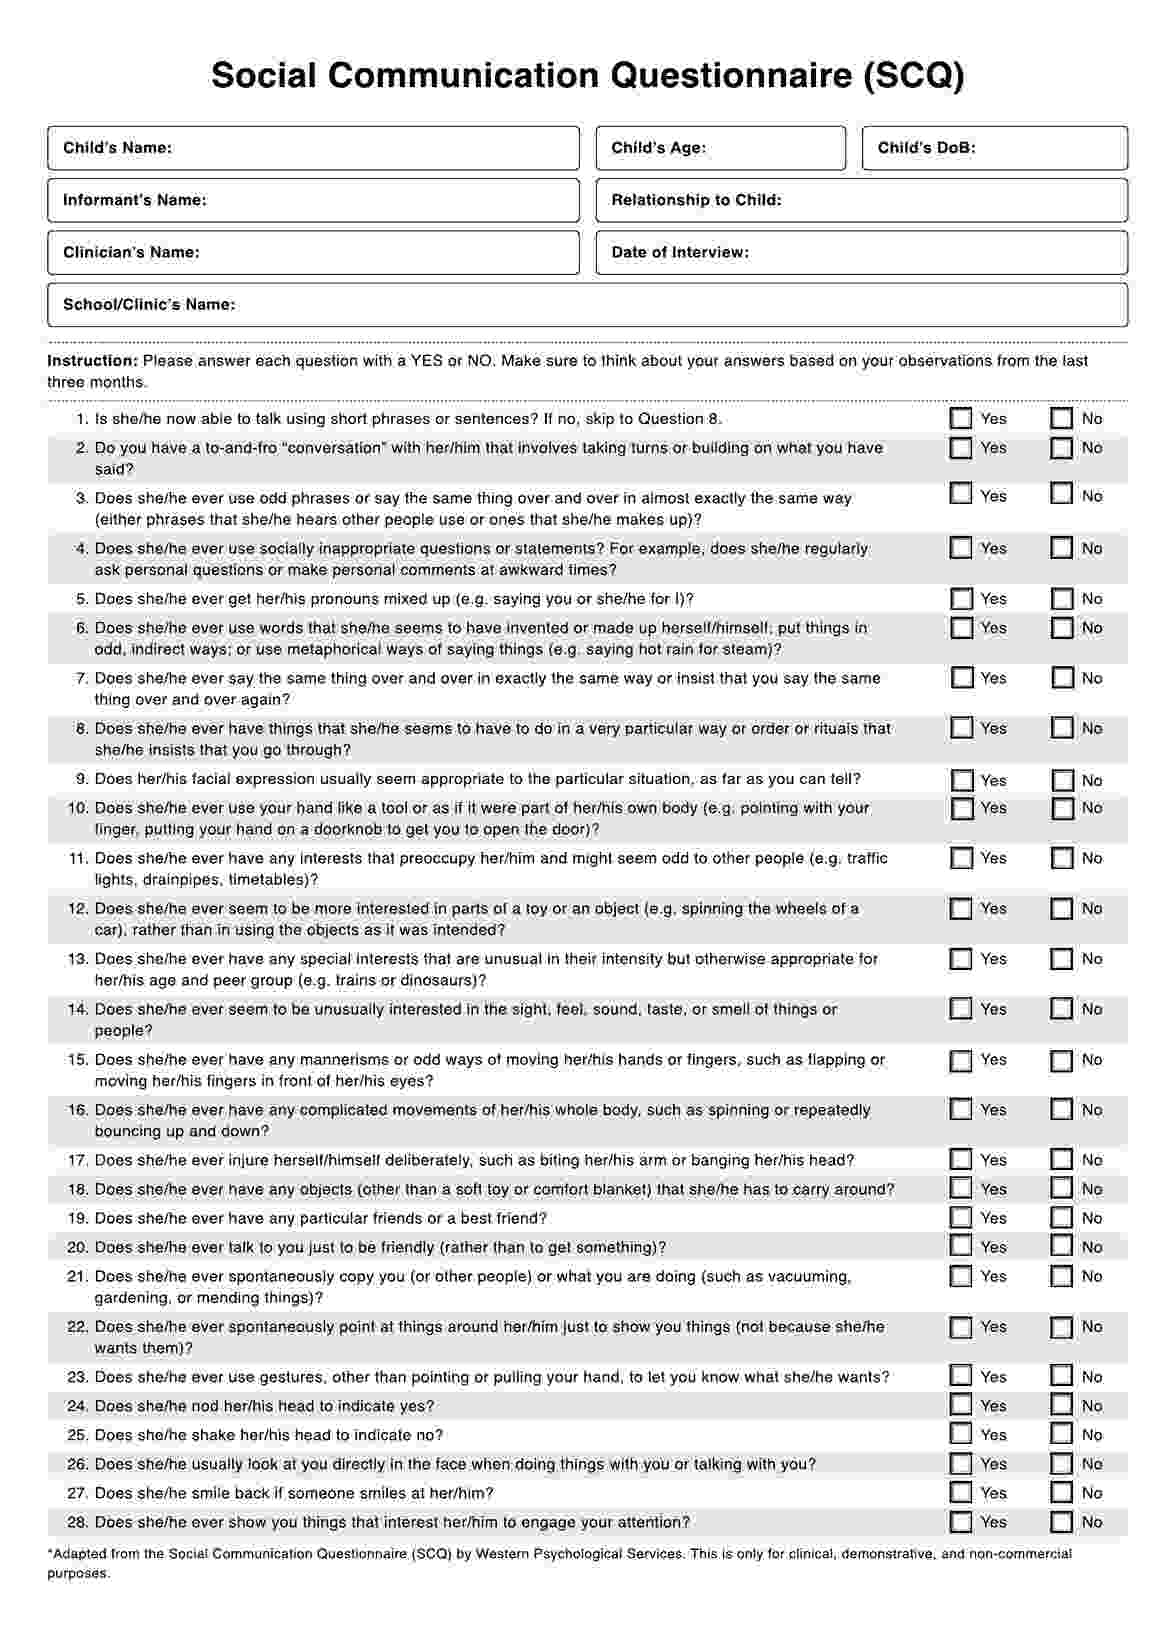 Social Communication Questionnaire PDF Example